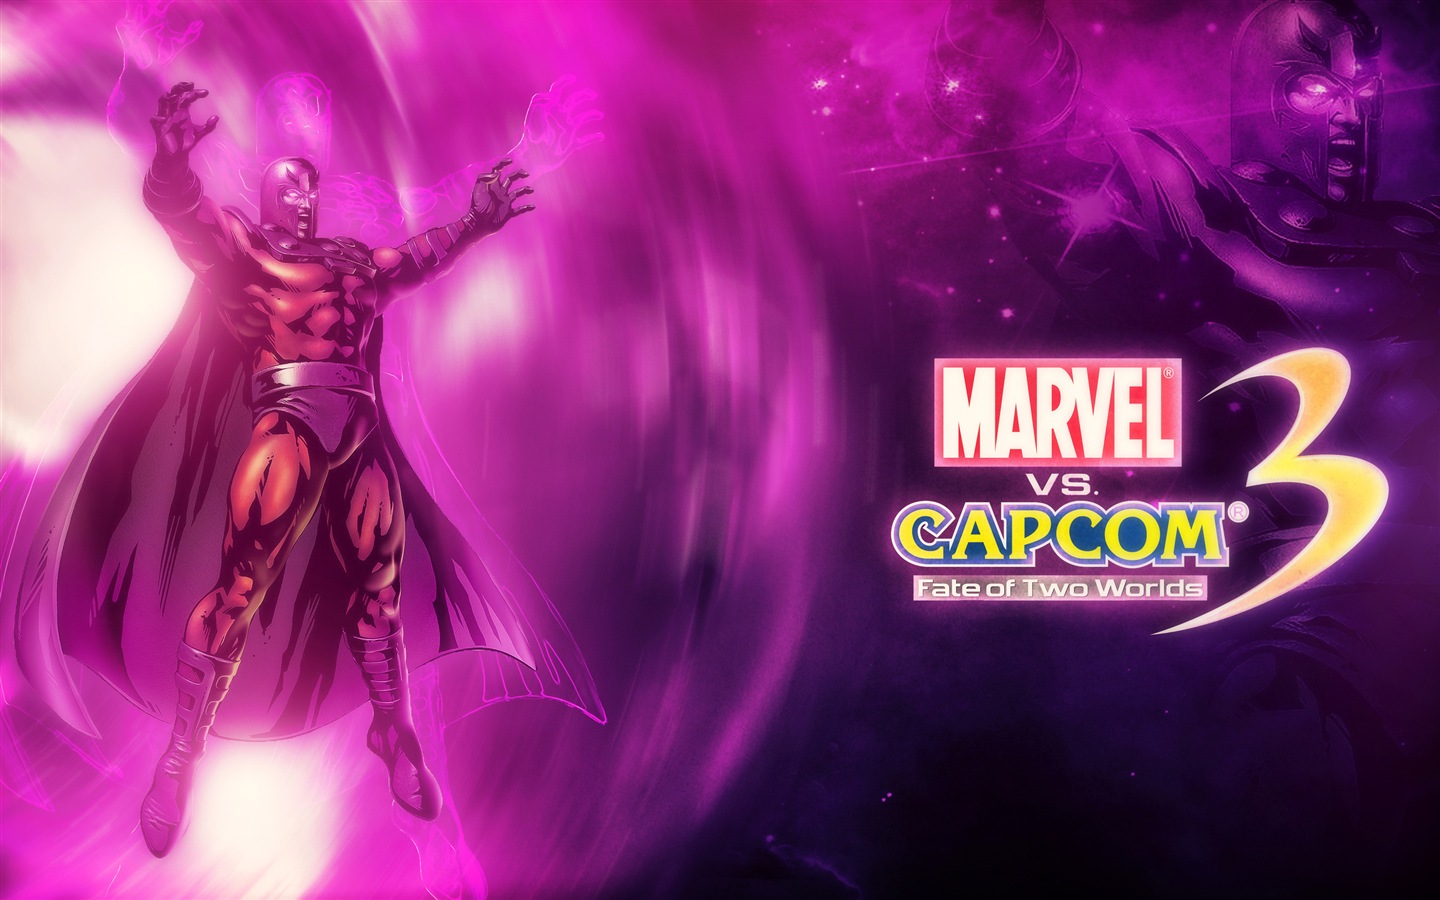 Marvel VS. Capcom 3: Fate of Two Worlds 漫畫英雄VS.卡普空3 高清遊戲壁紙 #7 - 1440x900